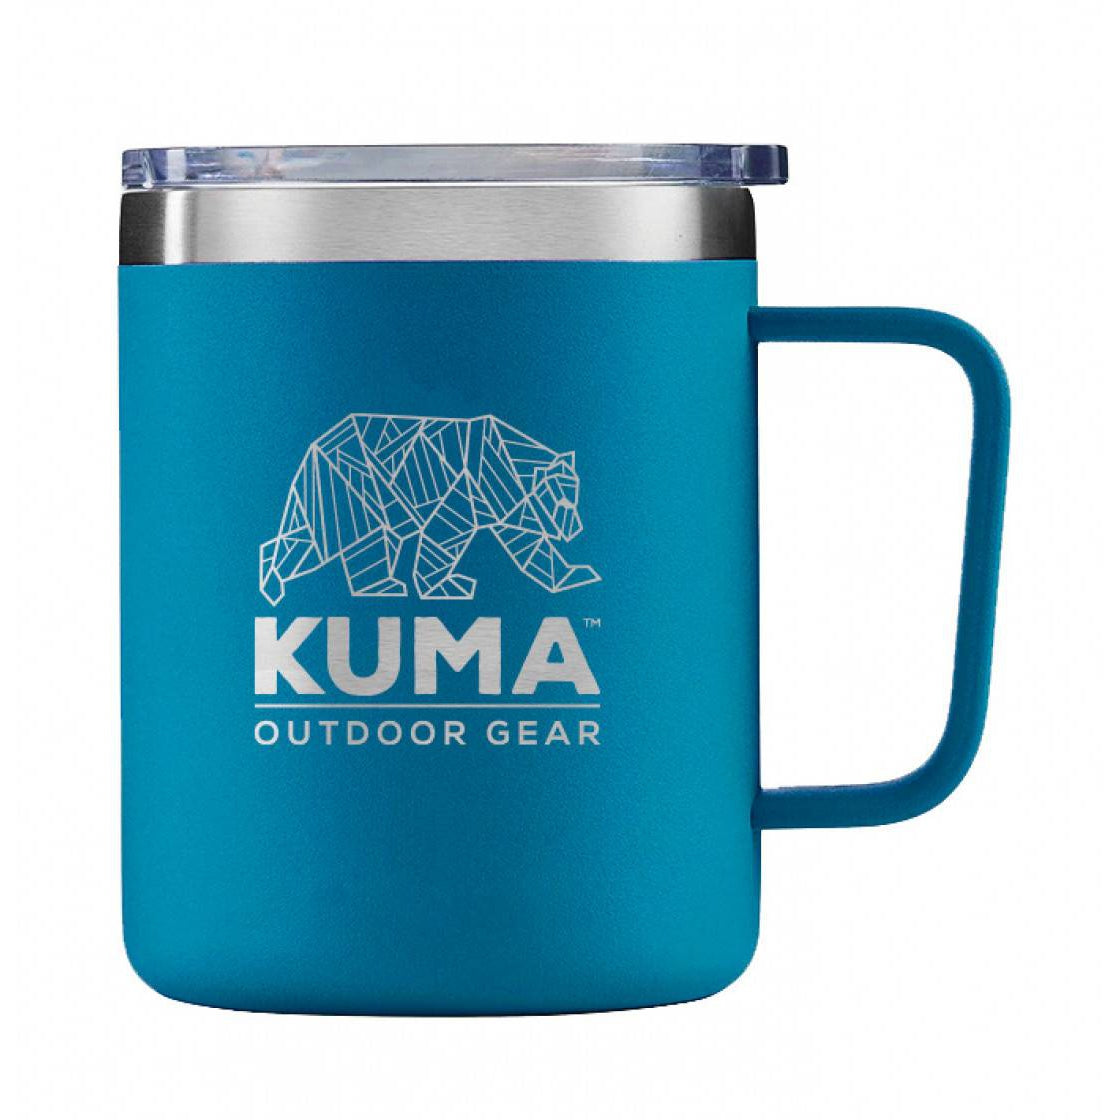 Kuma Outdoor Gear Qualifies for Free Shipping Kuma Outdoor Gear Travel Mug 12 oz Blue #KM-TM-BL